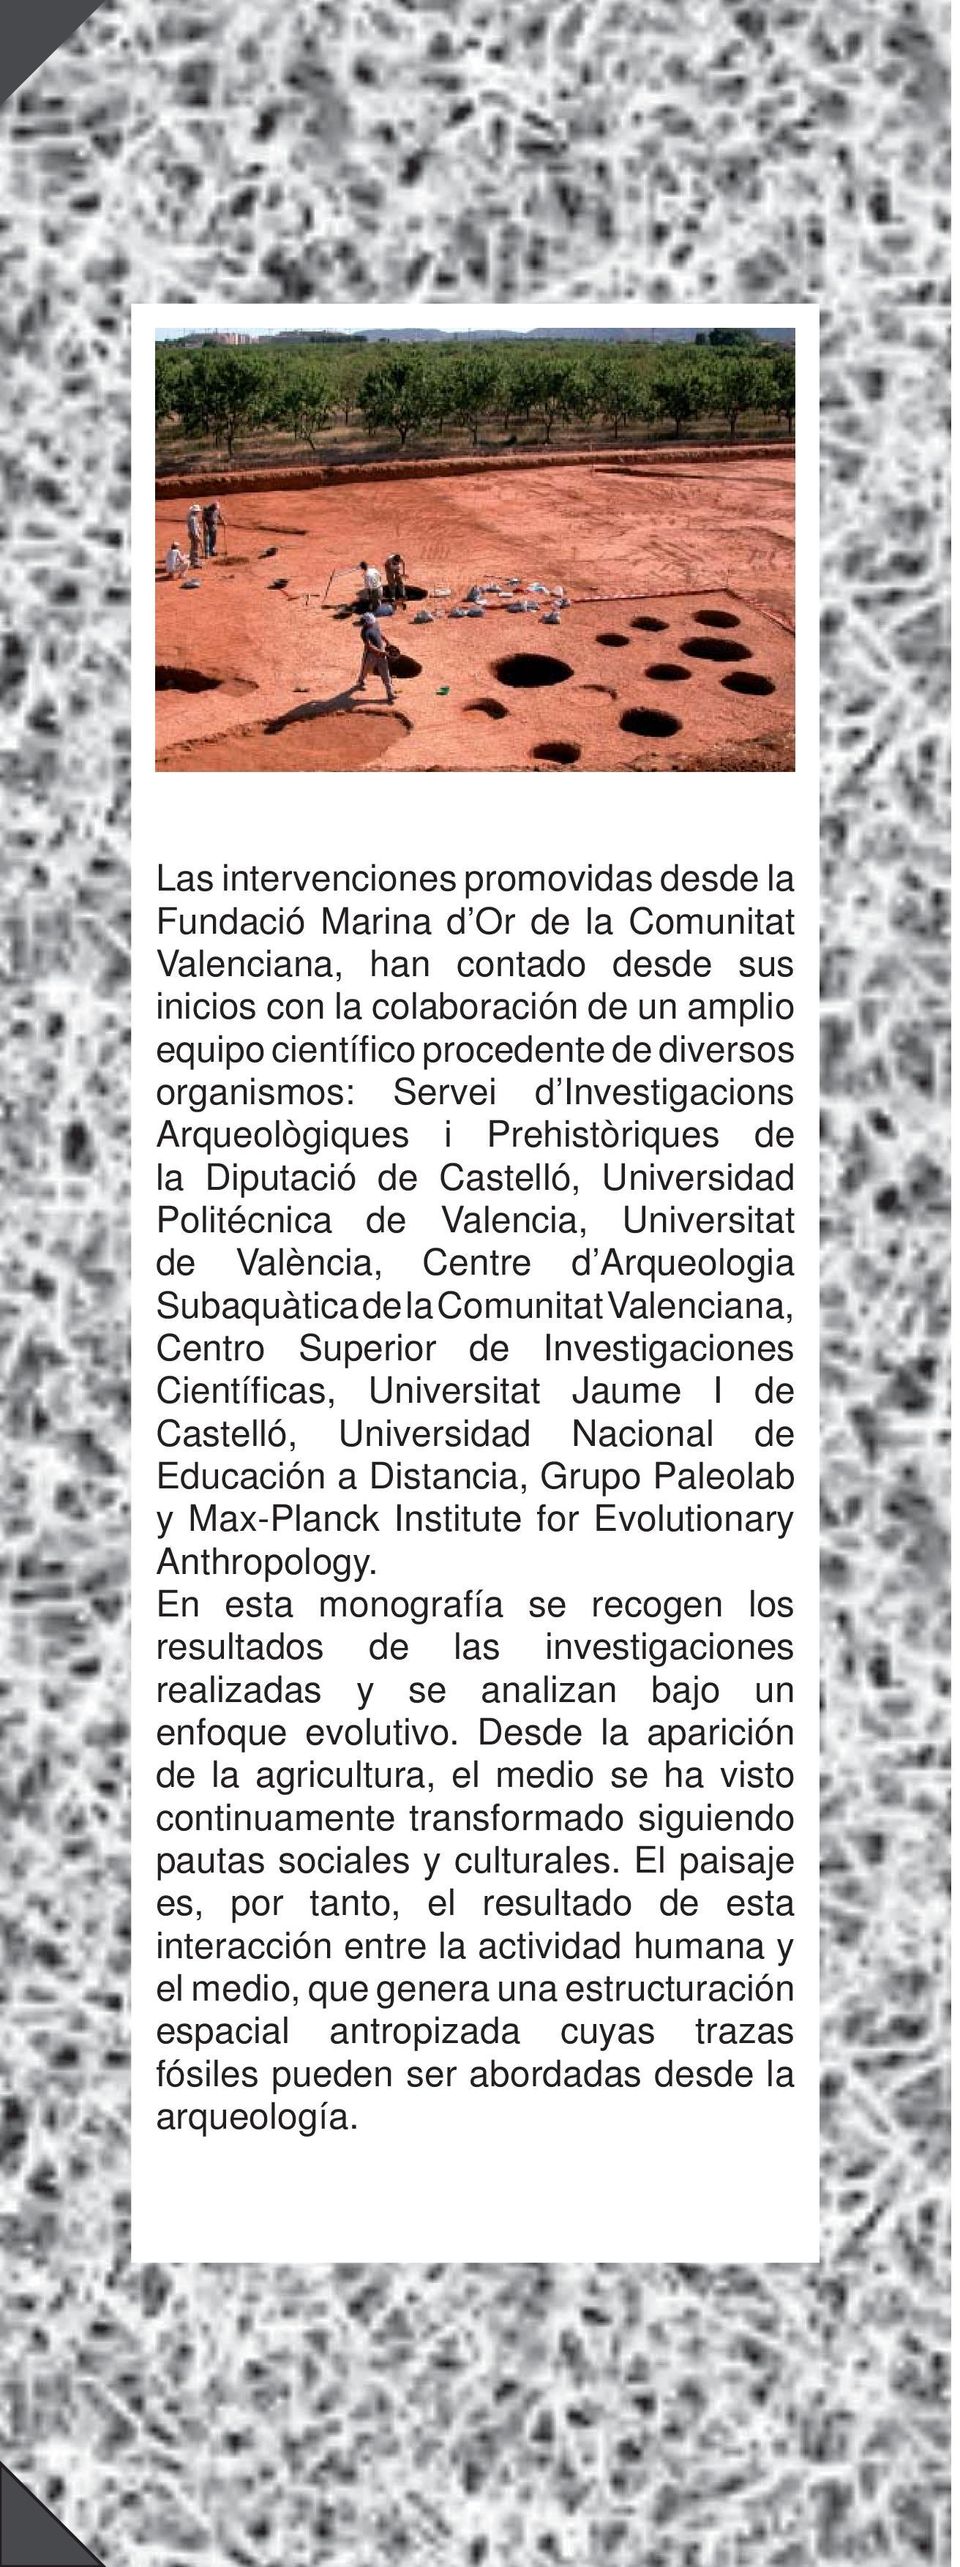 Comunitat Valenciana, Centro Superior de Investigaciones Científi cas, Universitat Jaume I de Castelló, Universidad Nacional de Educación a Distancia, Grupo Paleolab y Max-Planck Institute for